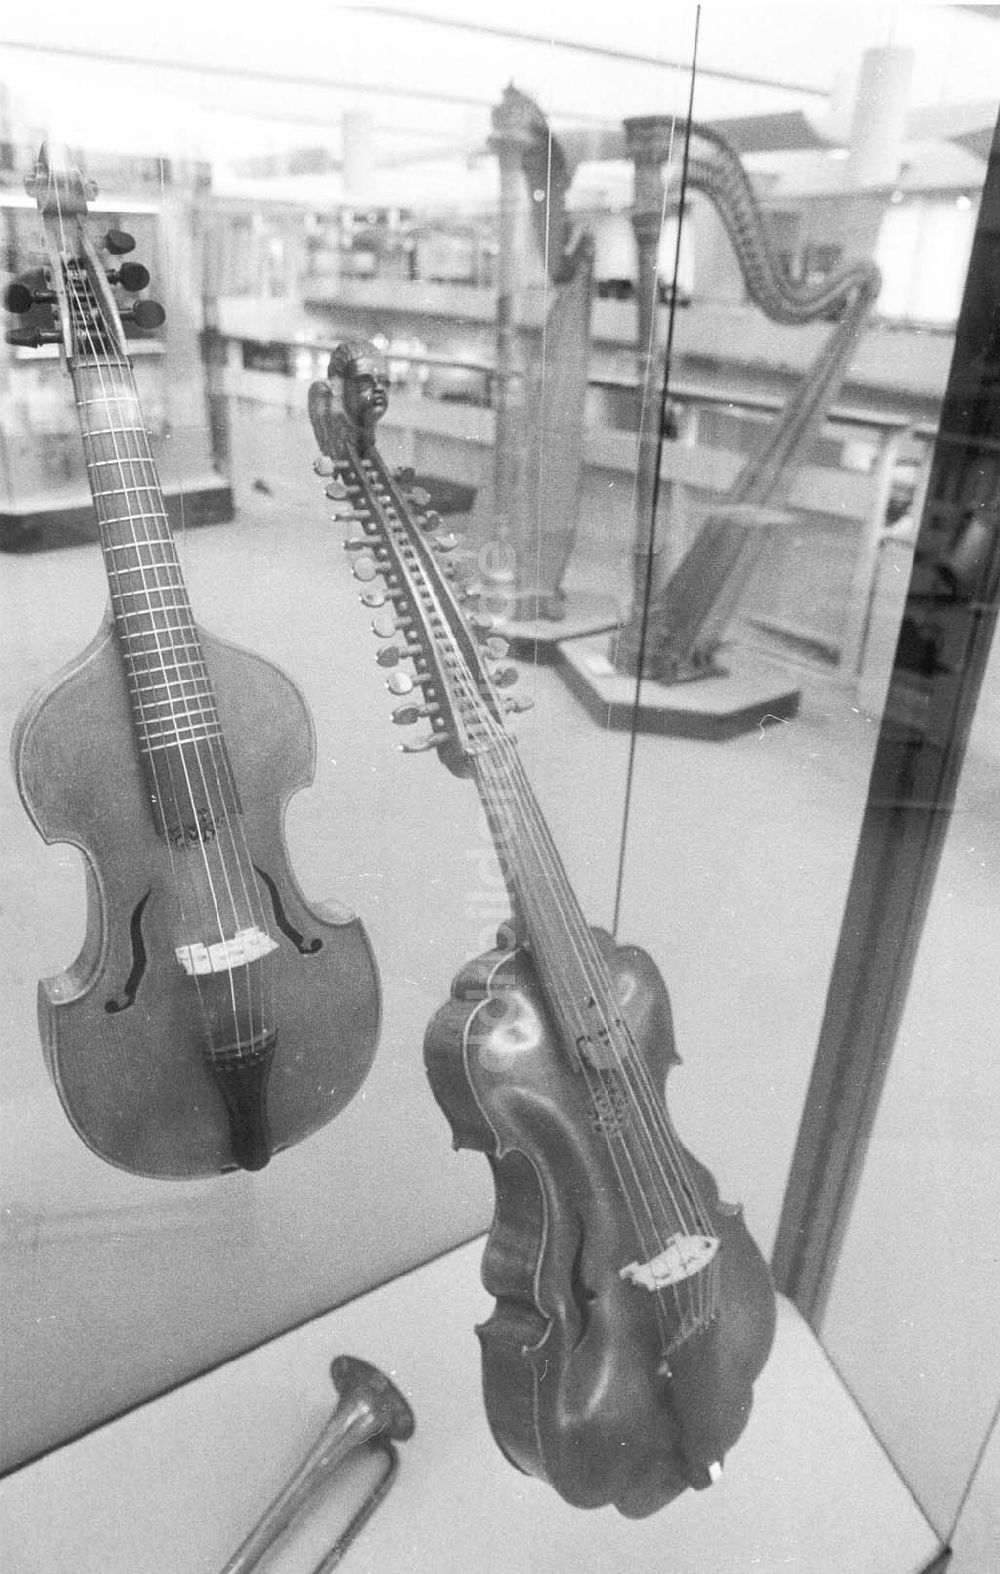 DDR-Bildarchiv: Berlin - Musikinstrumentemuseum Berlin, Tiergartenstraße.1 24.02.1993